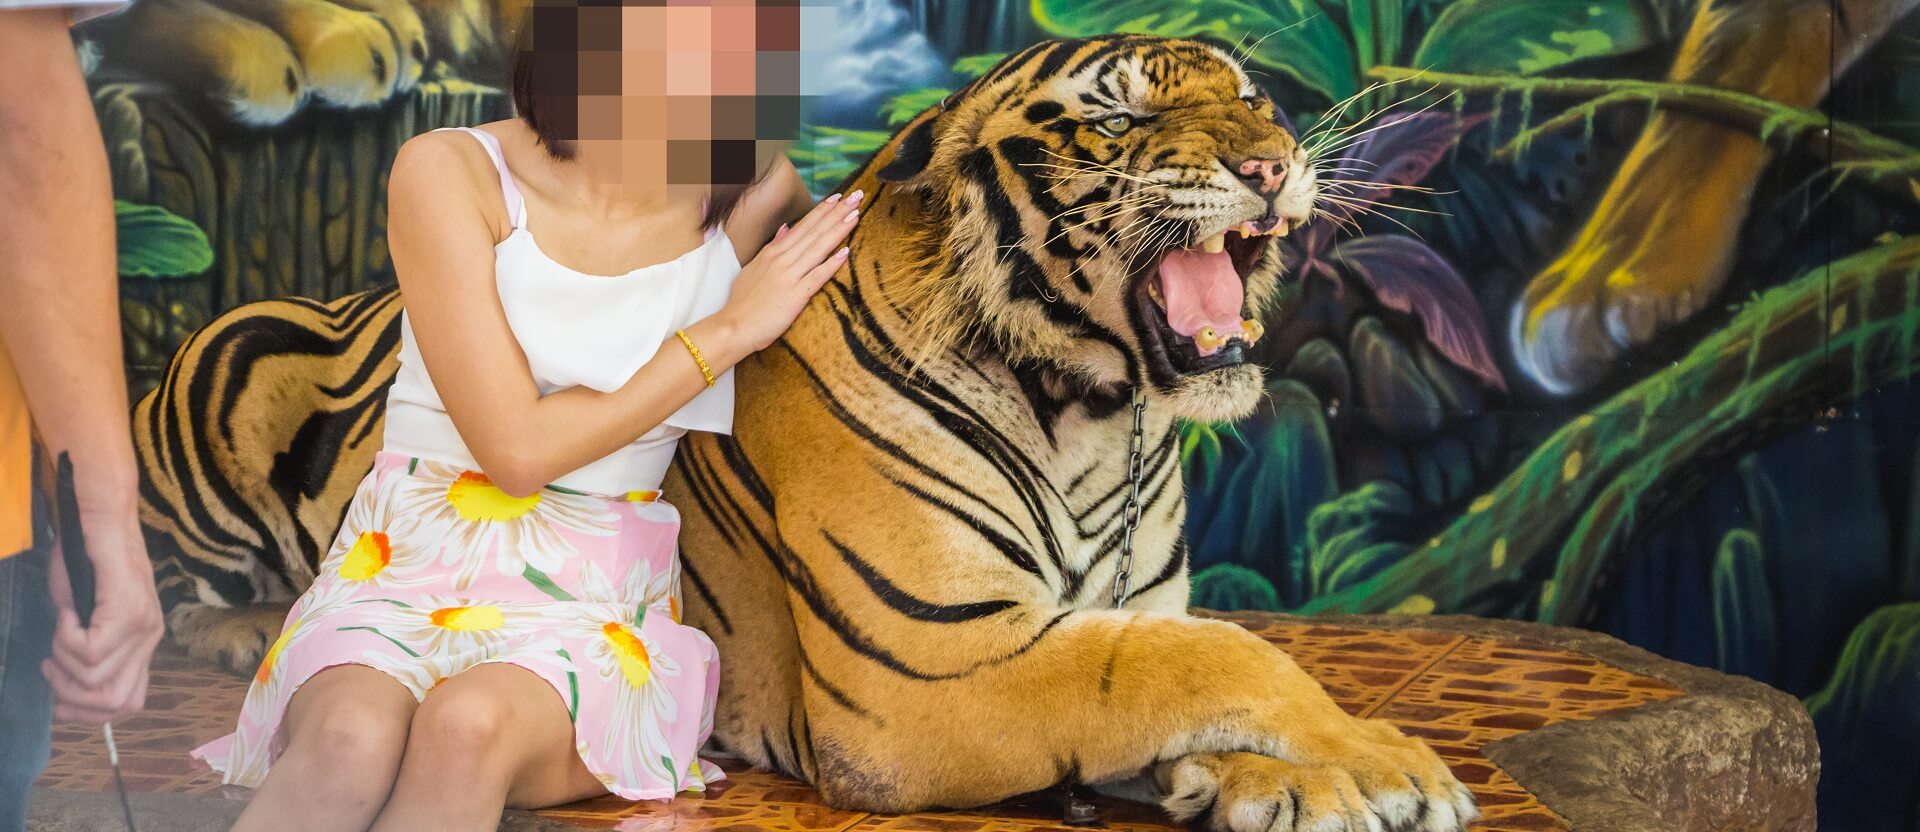 Tiger selfies in Thailand